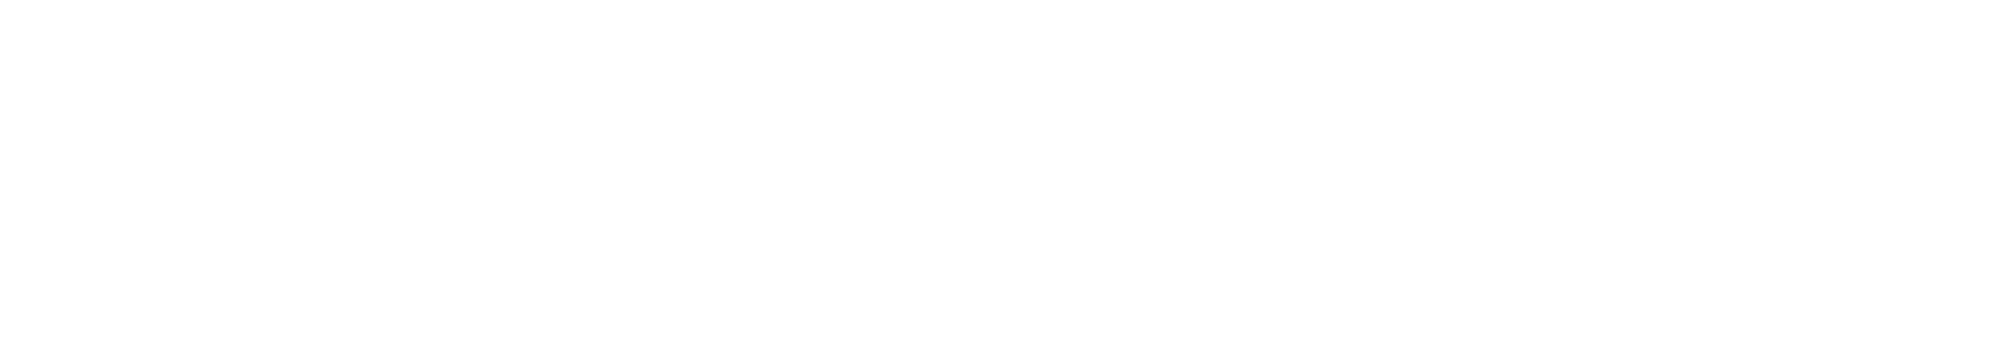 Georgia-Pacific-logo